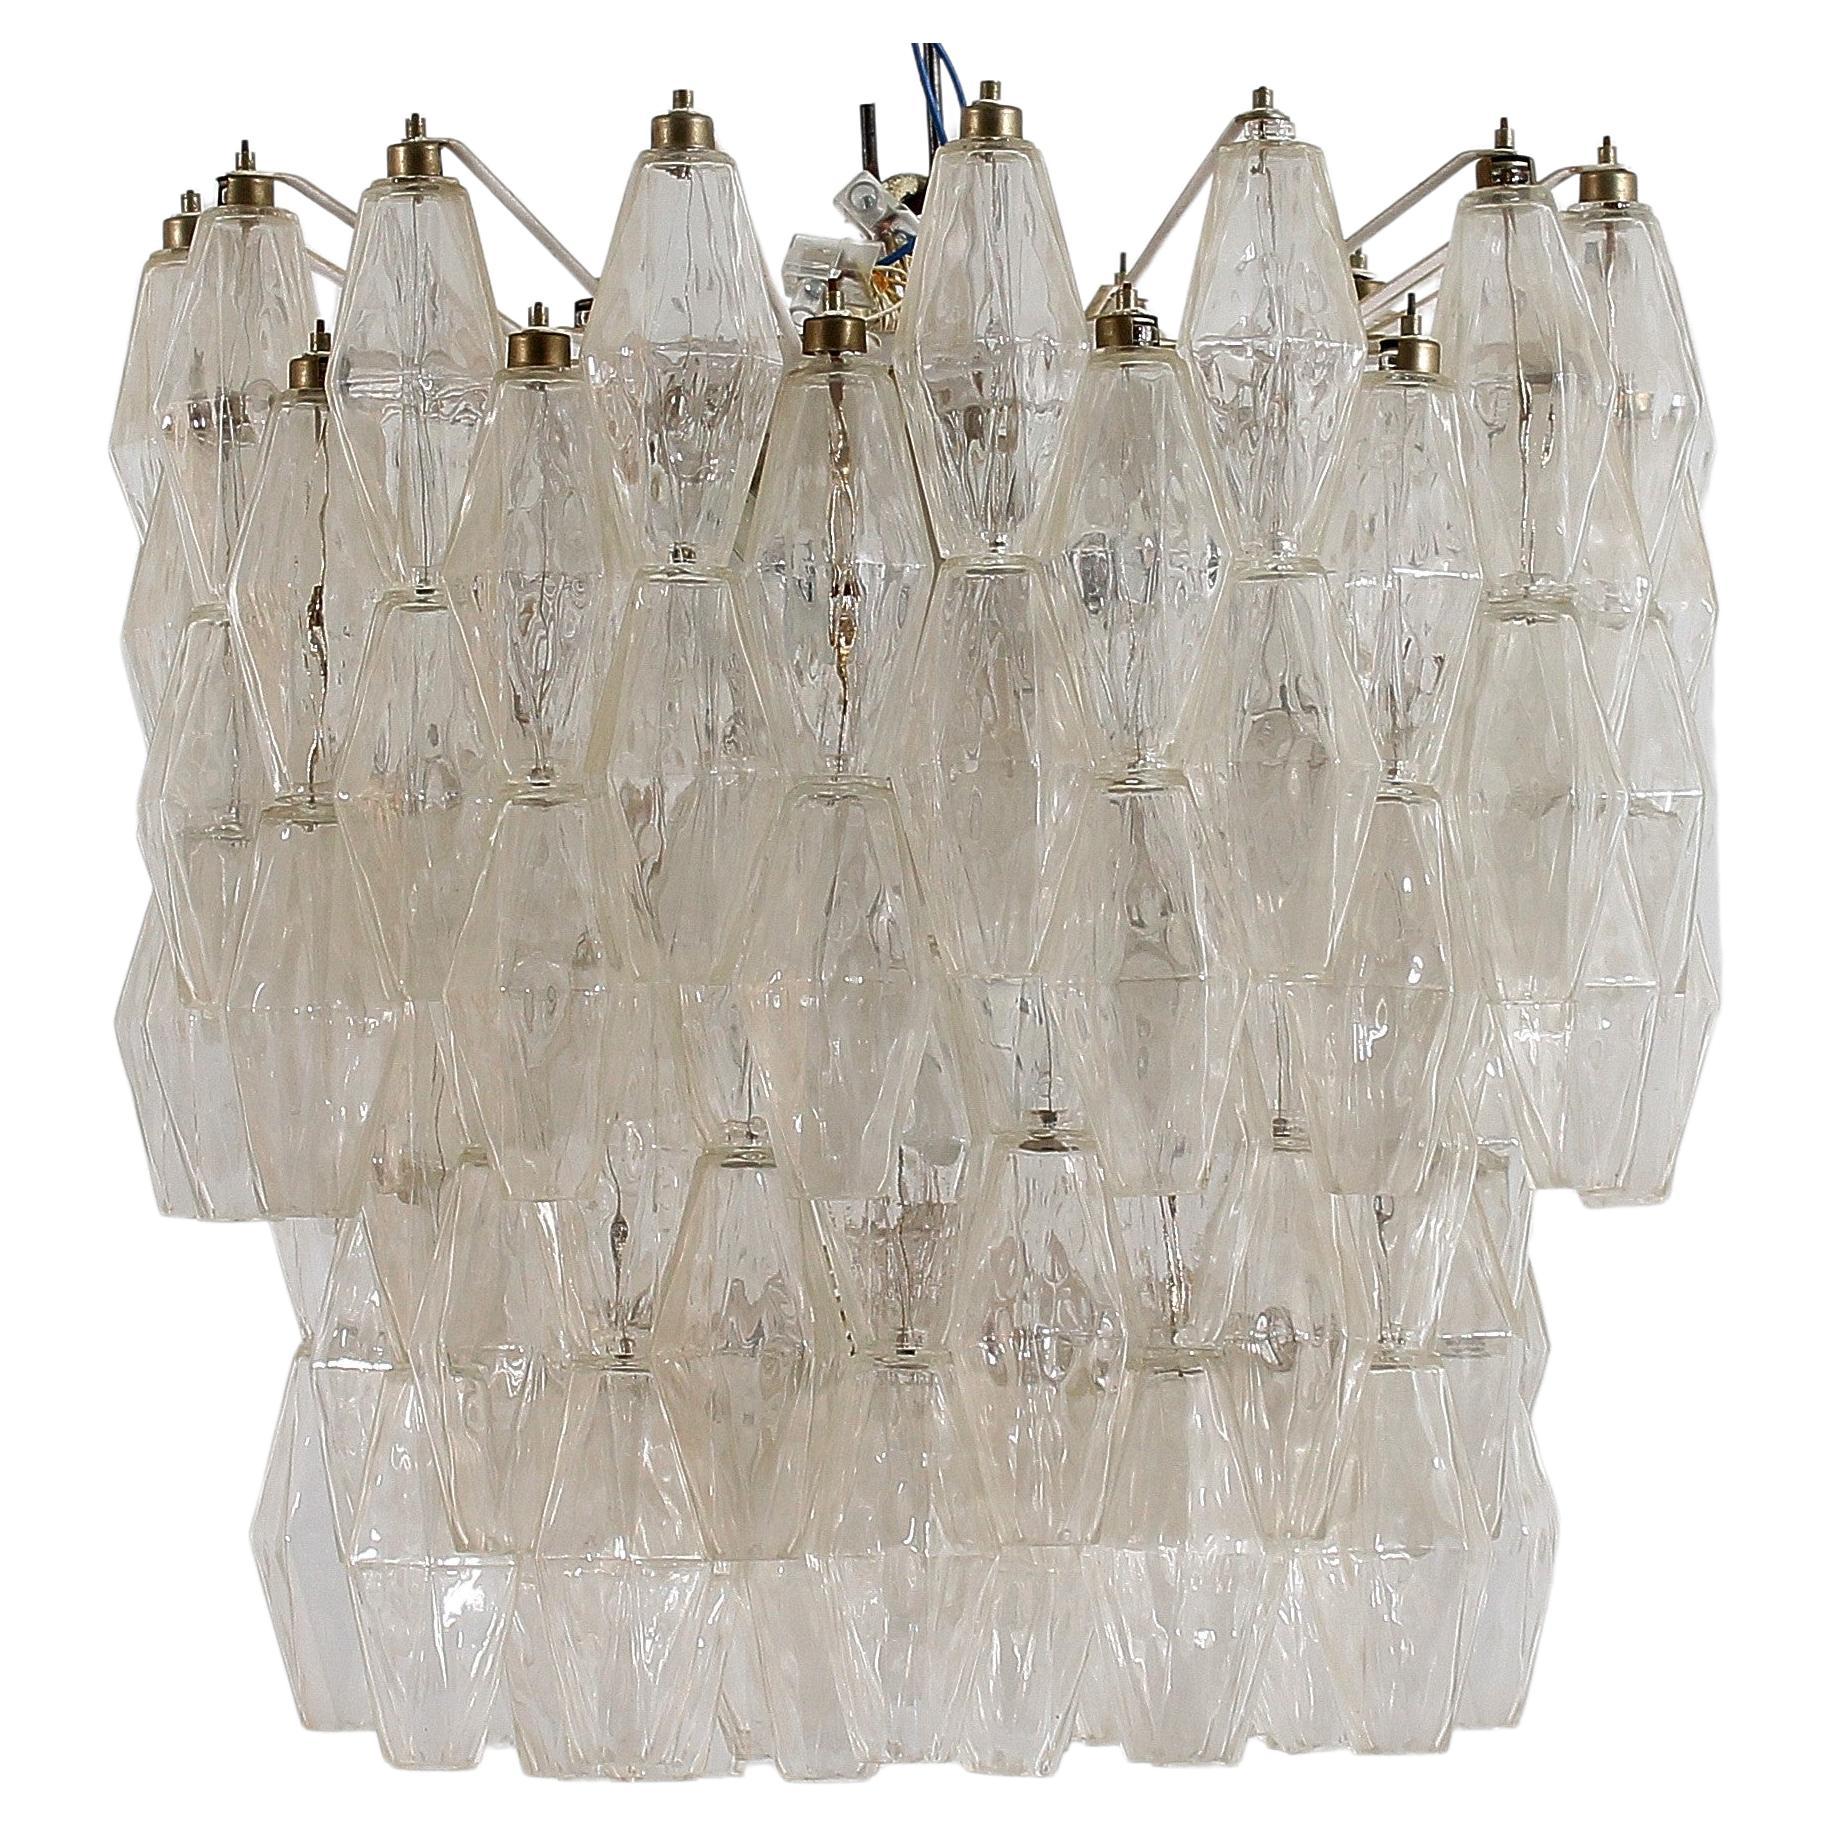 Mod. "Poliedri" Murano Glass Ceiling Lamp by C. Scarpa for Venini 1960s, Italy